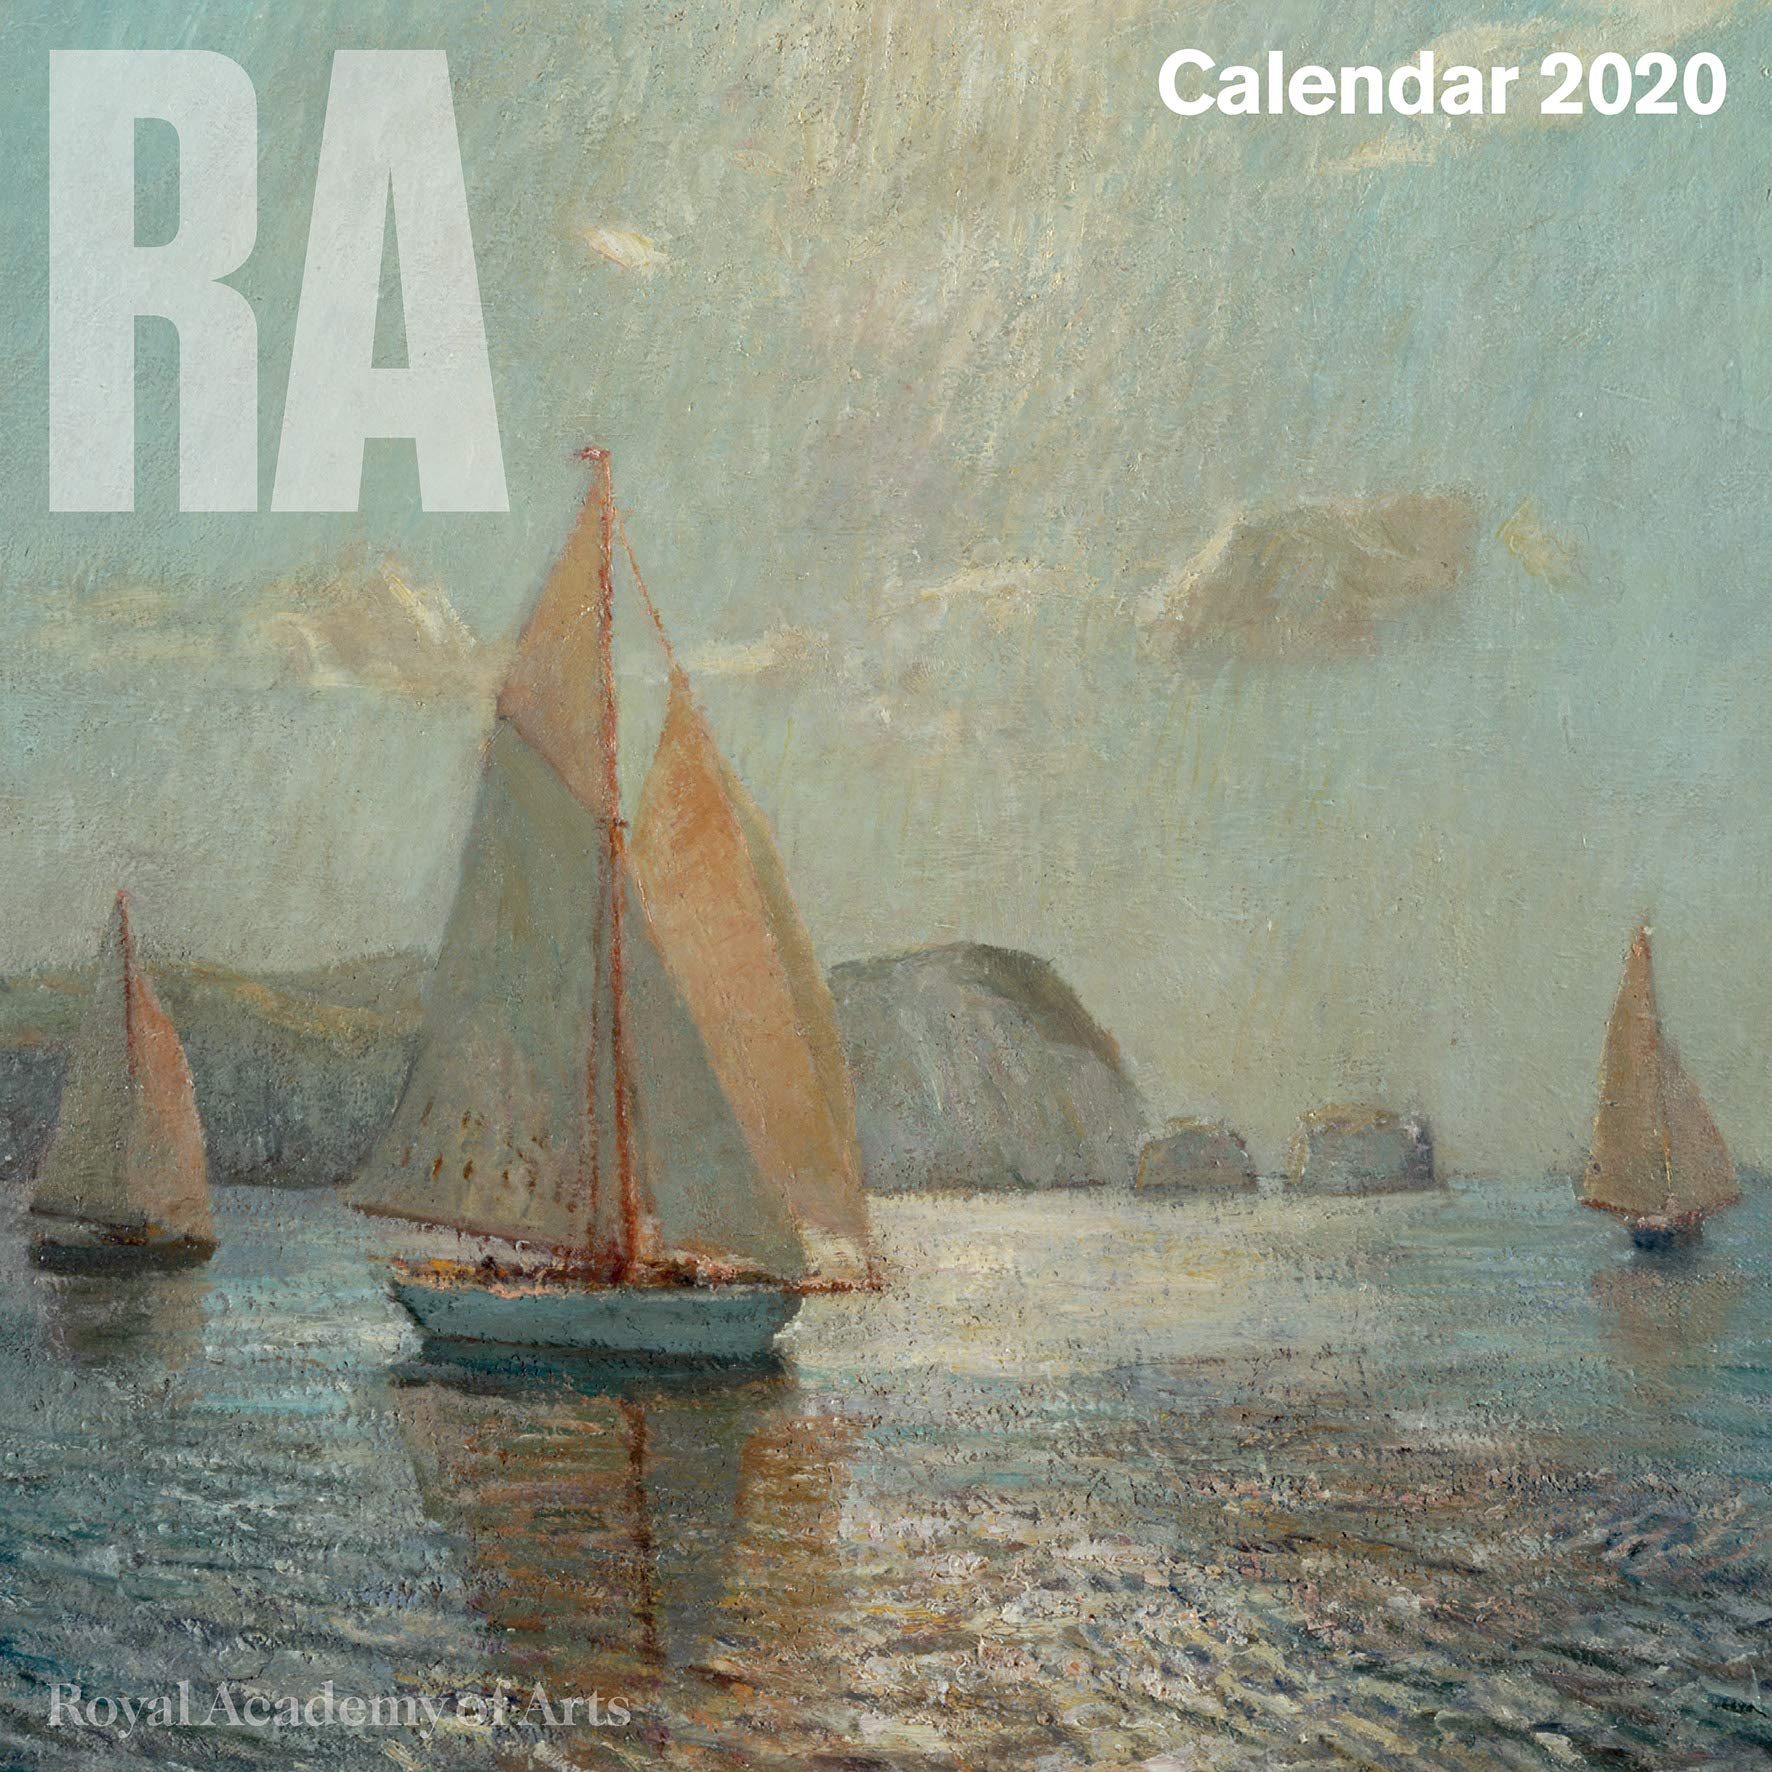 Calendar 2020 - Royal Academy | Flame Tree Publishing